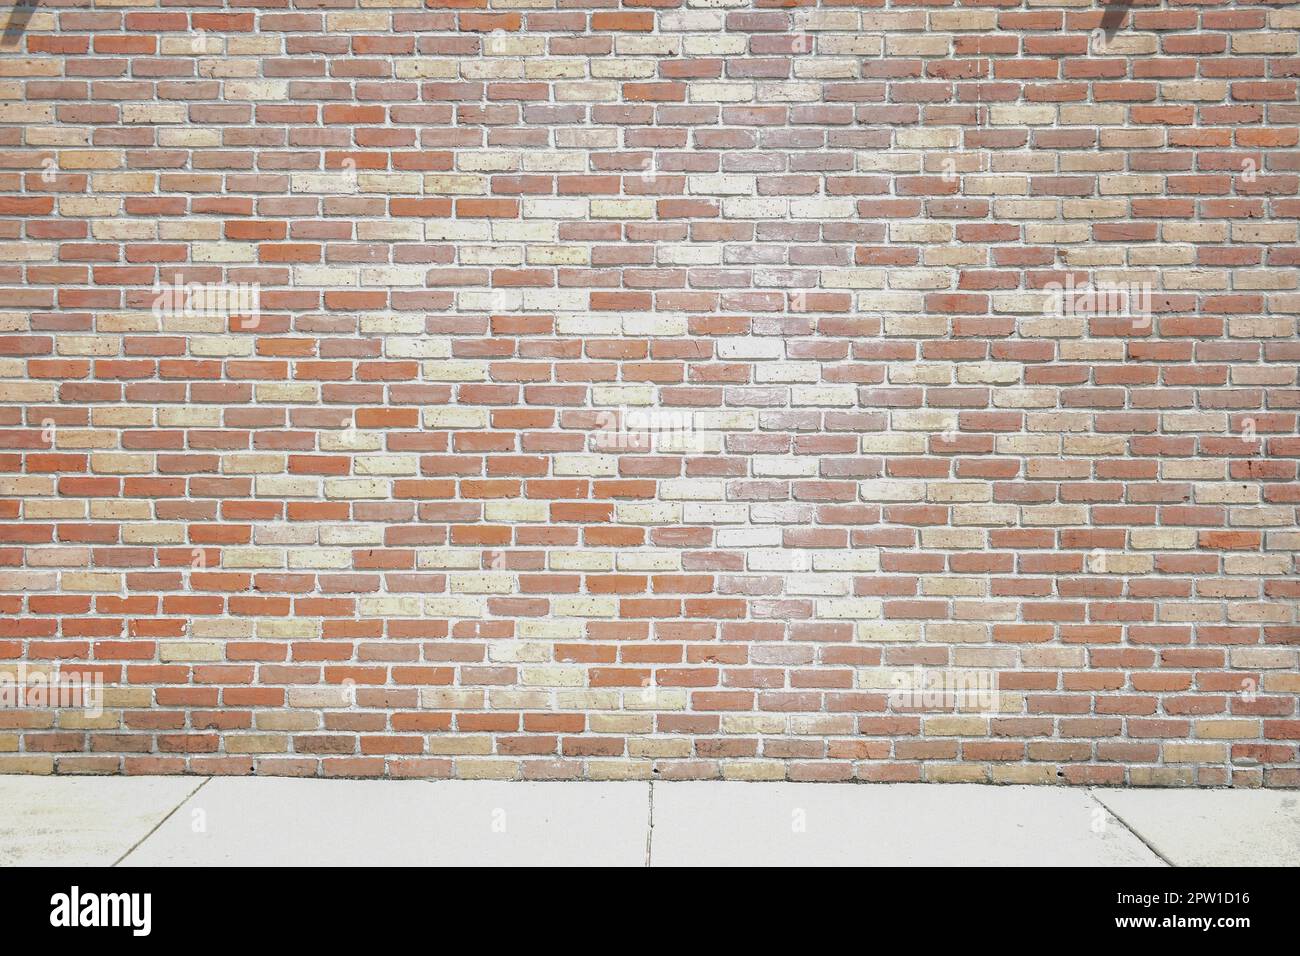 Muted tones brick wall and white sidewalk Stock Photo